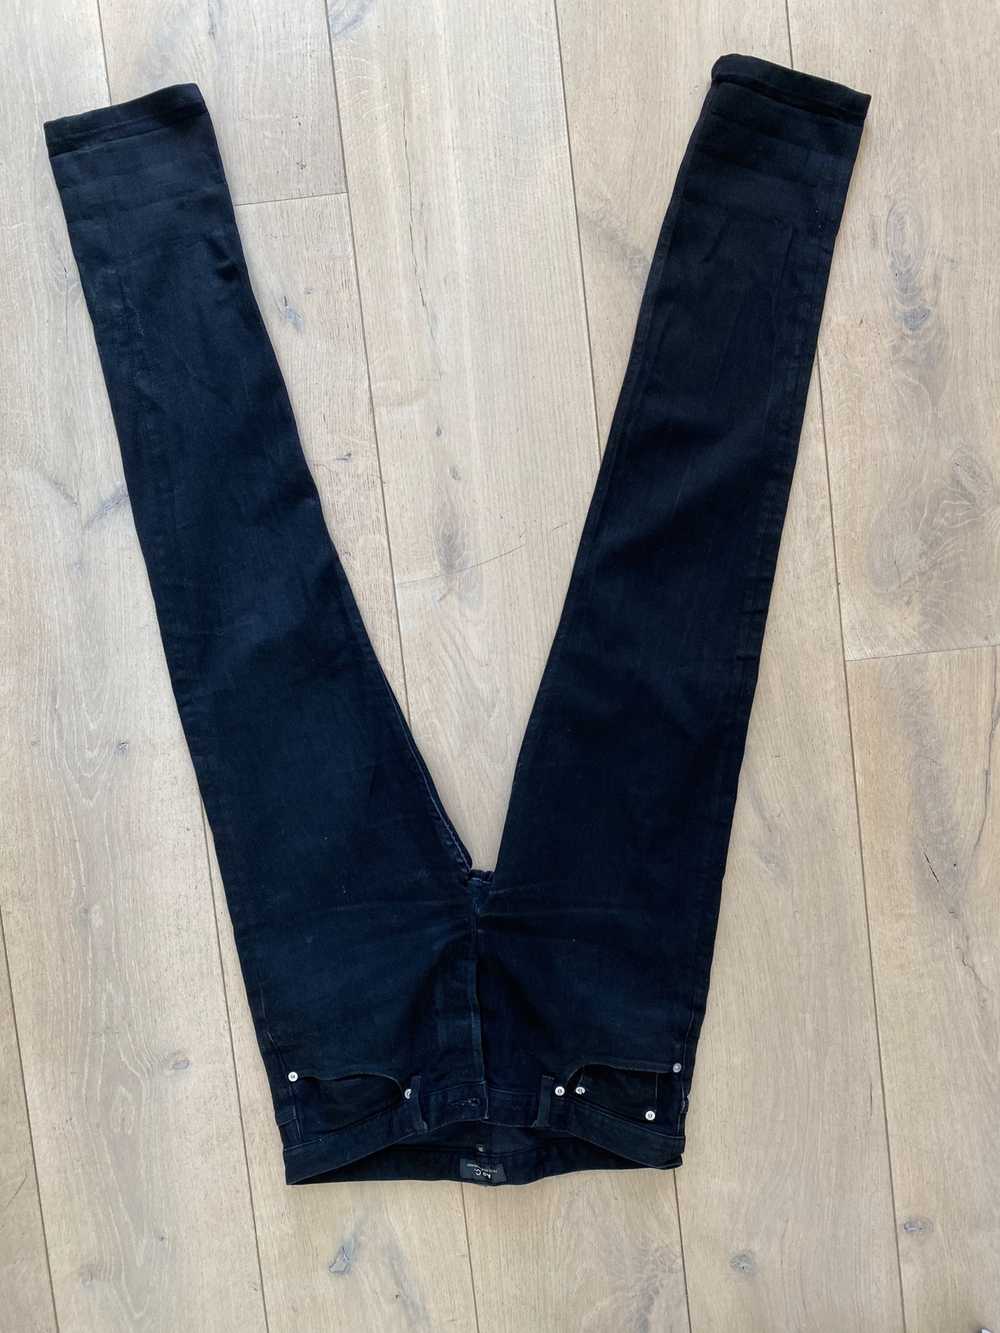 Paul Smith Black skinny jeans - image 3